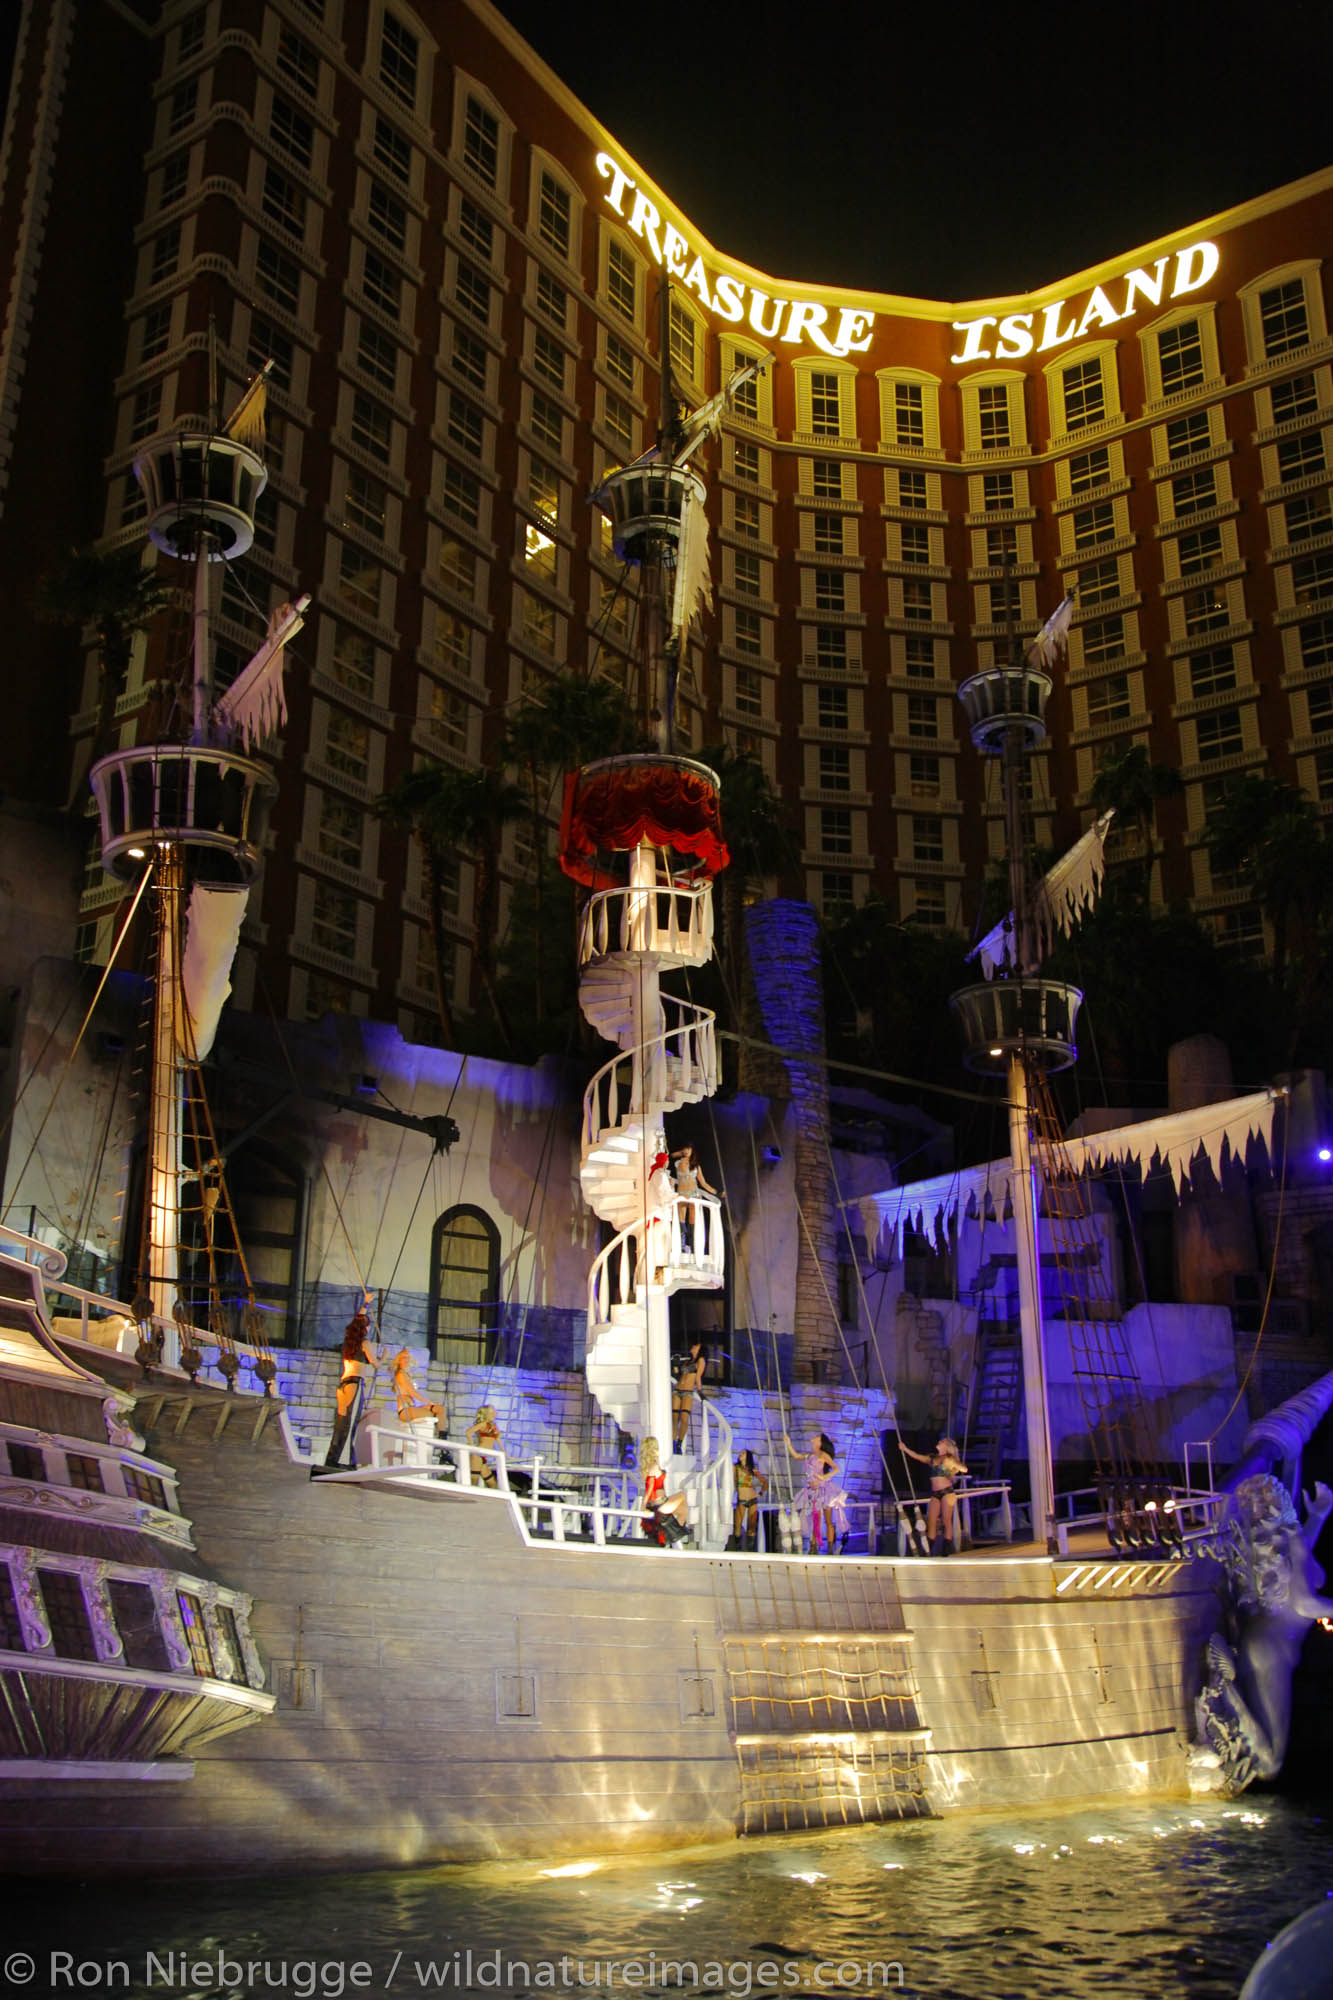 The Pirate Show at Treasure Island Hotel and Casino, Las Vegas Strip, Nevada.